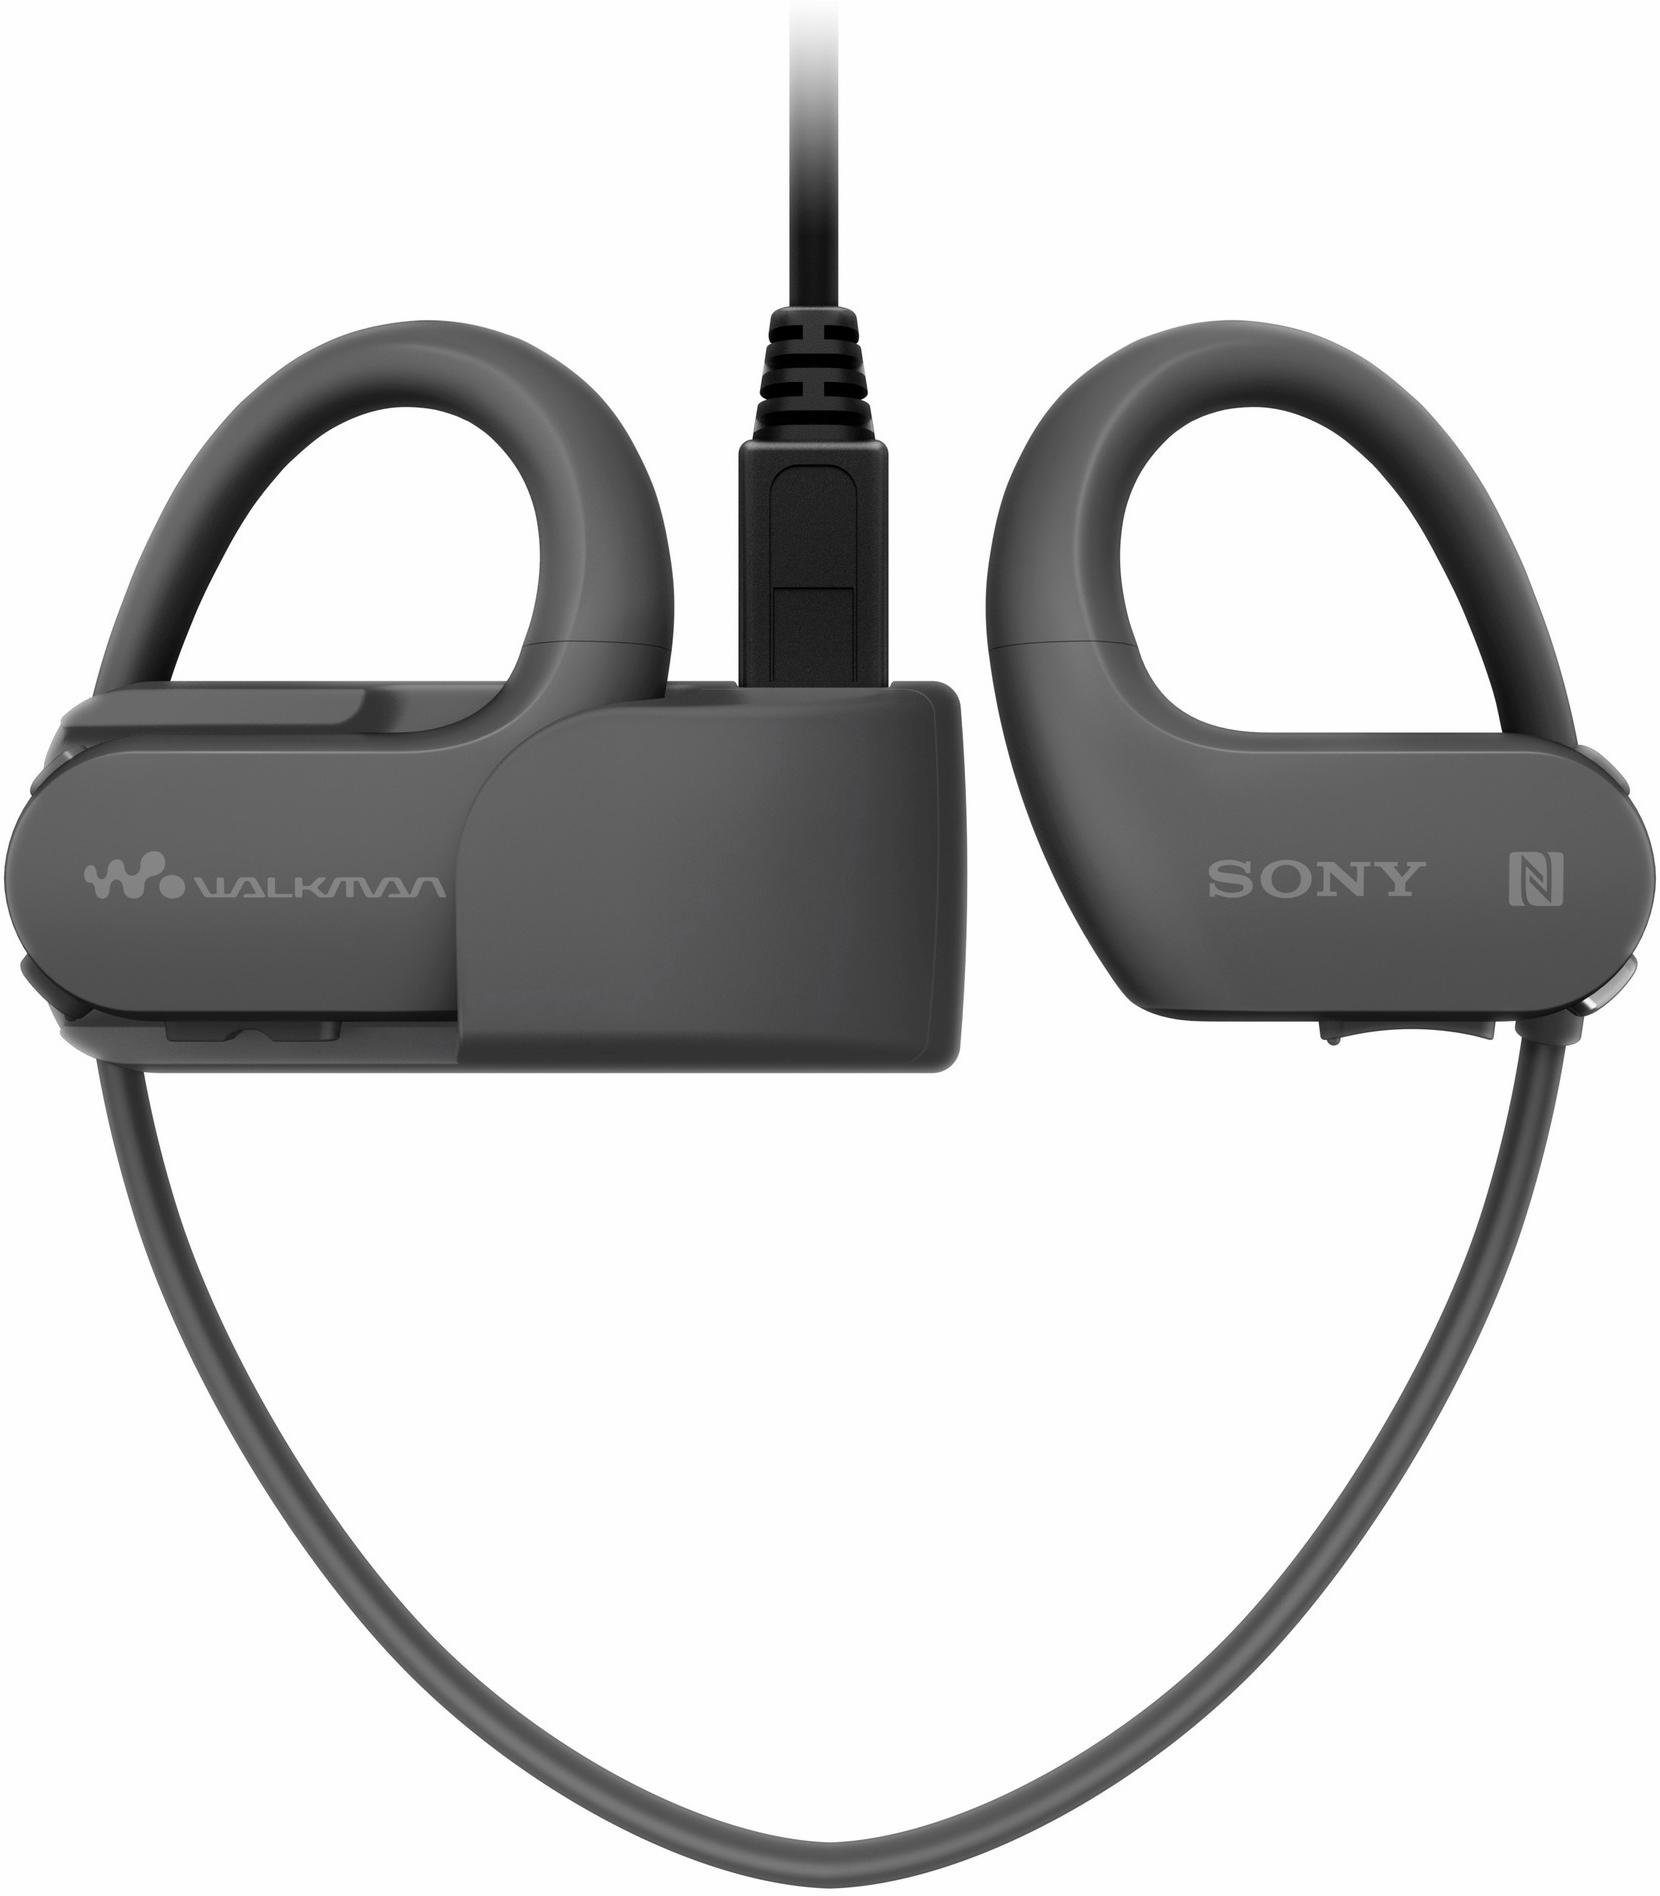 Sony NW-WS623 Sport-Kopfhörer (4GB Speicher) schwarz | Sportkopfhörer